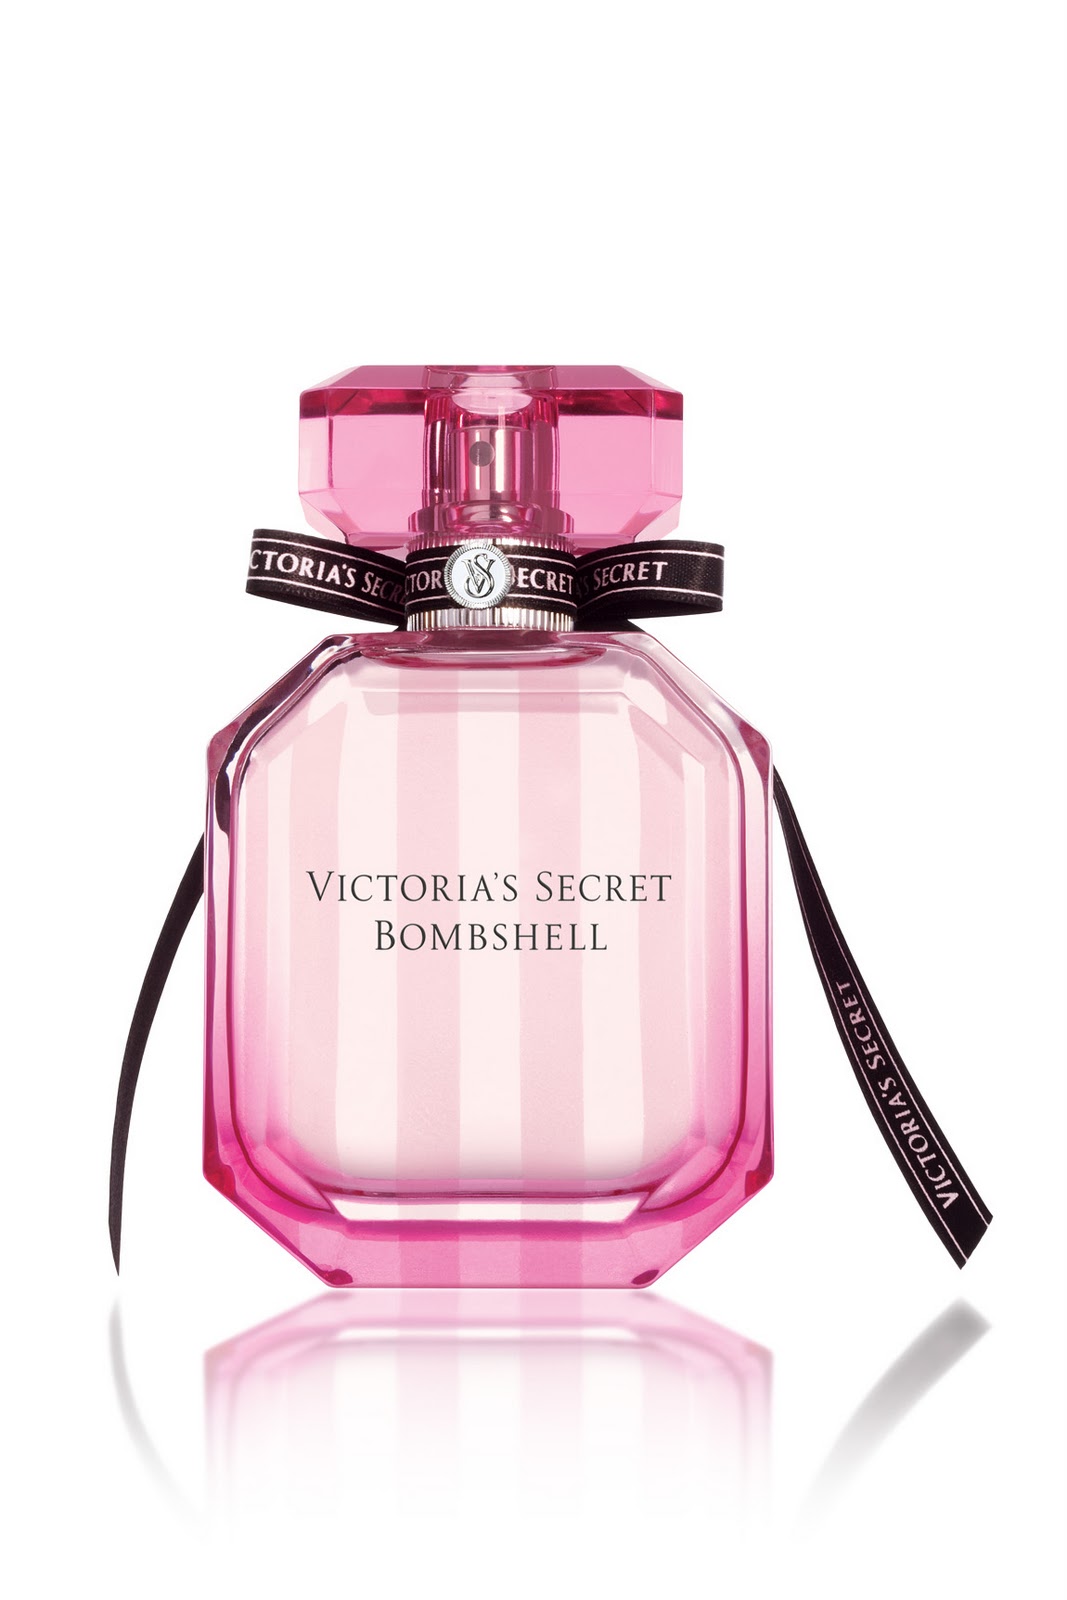 The Beauty Alchemist Victoria's Secret Black ( Pink) Friday Specials